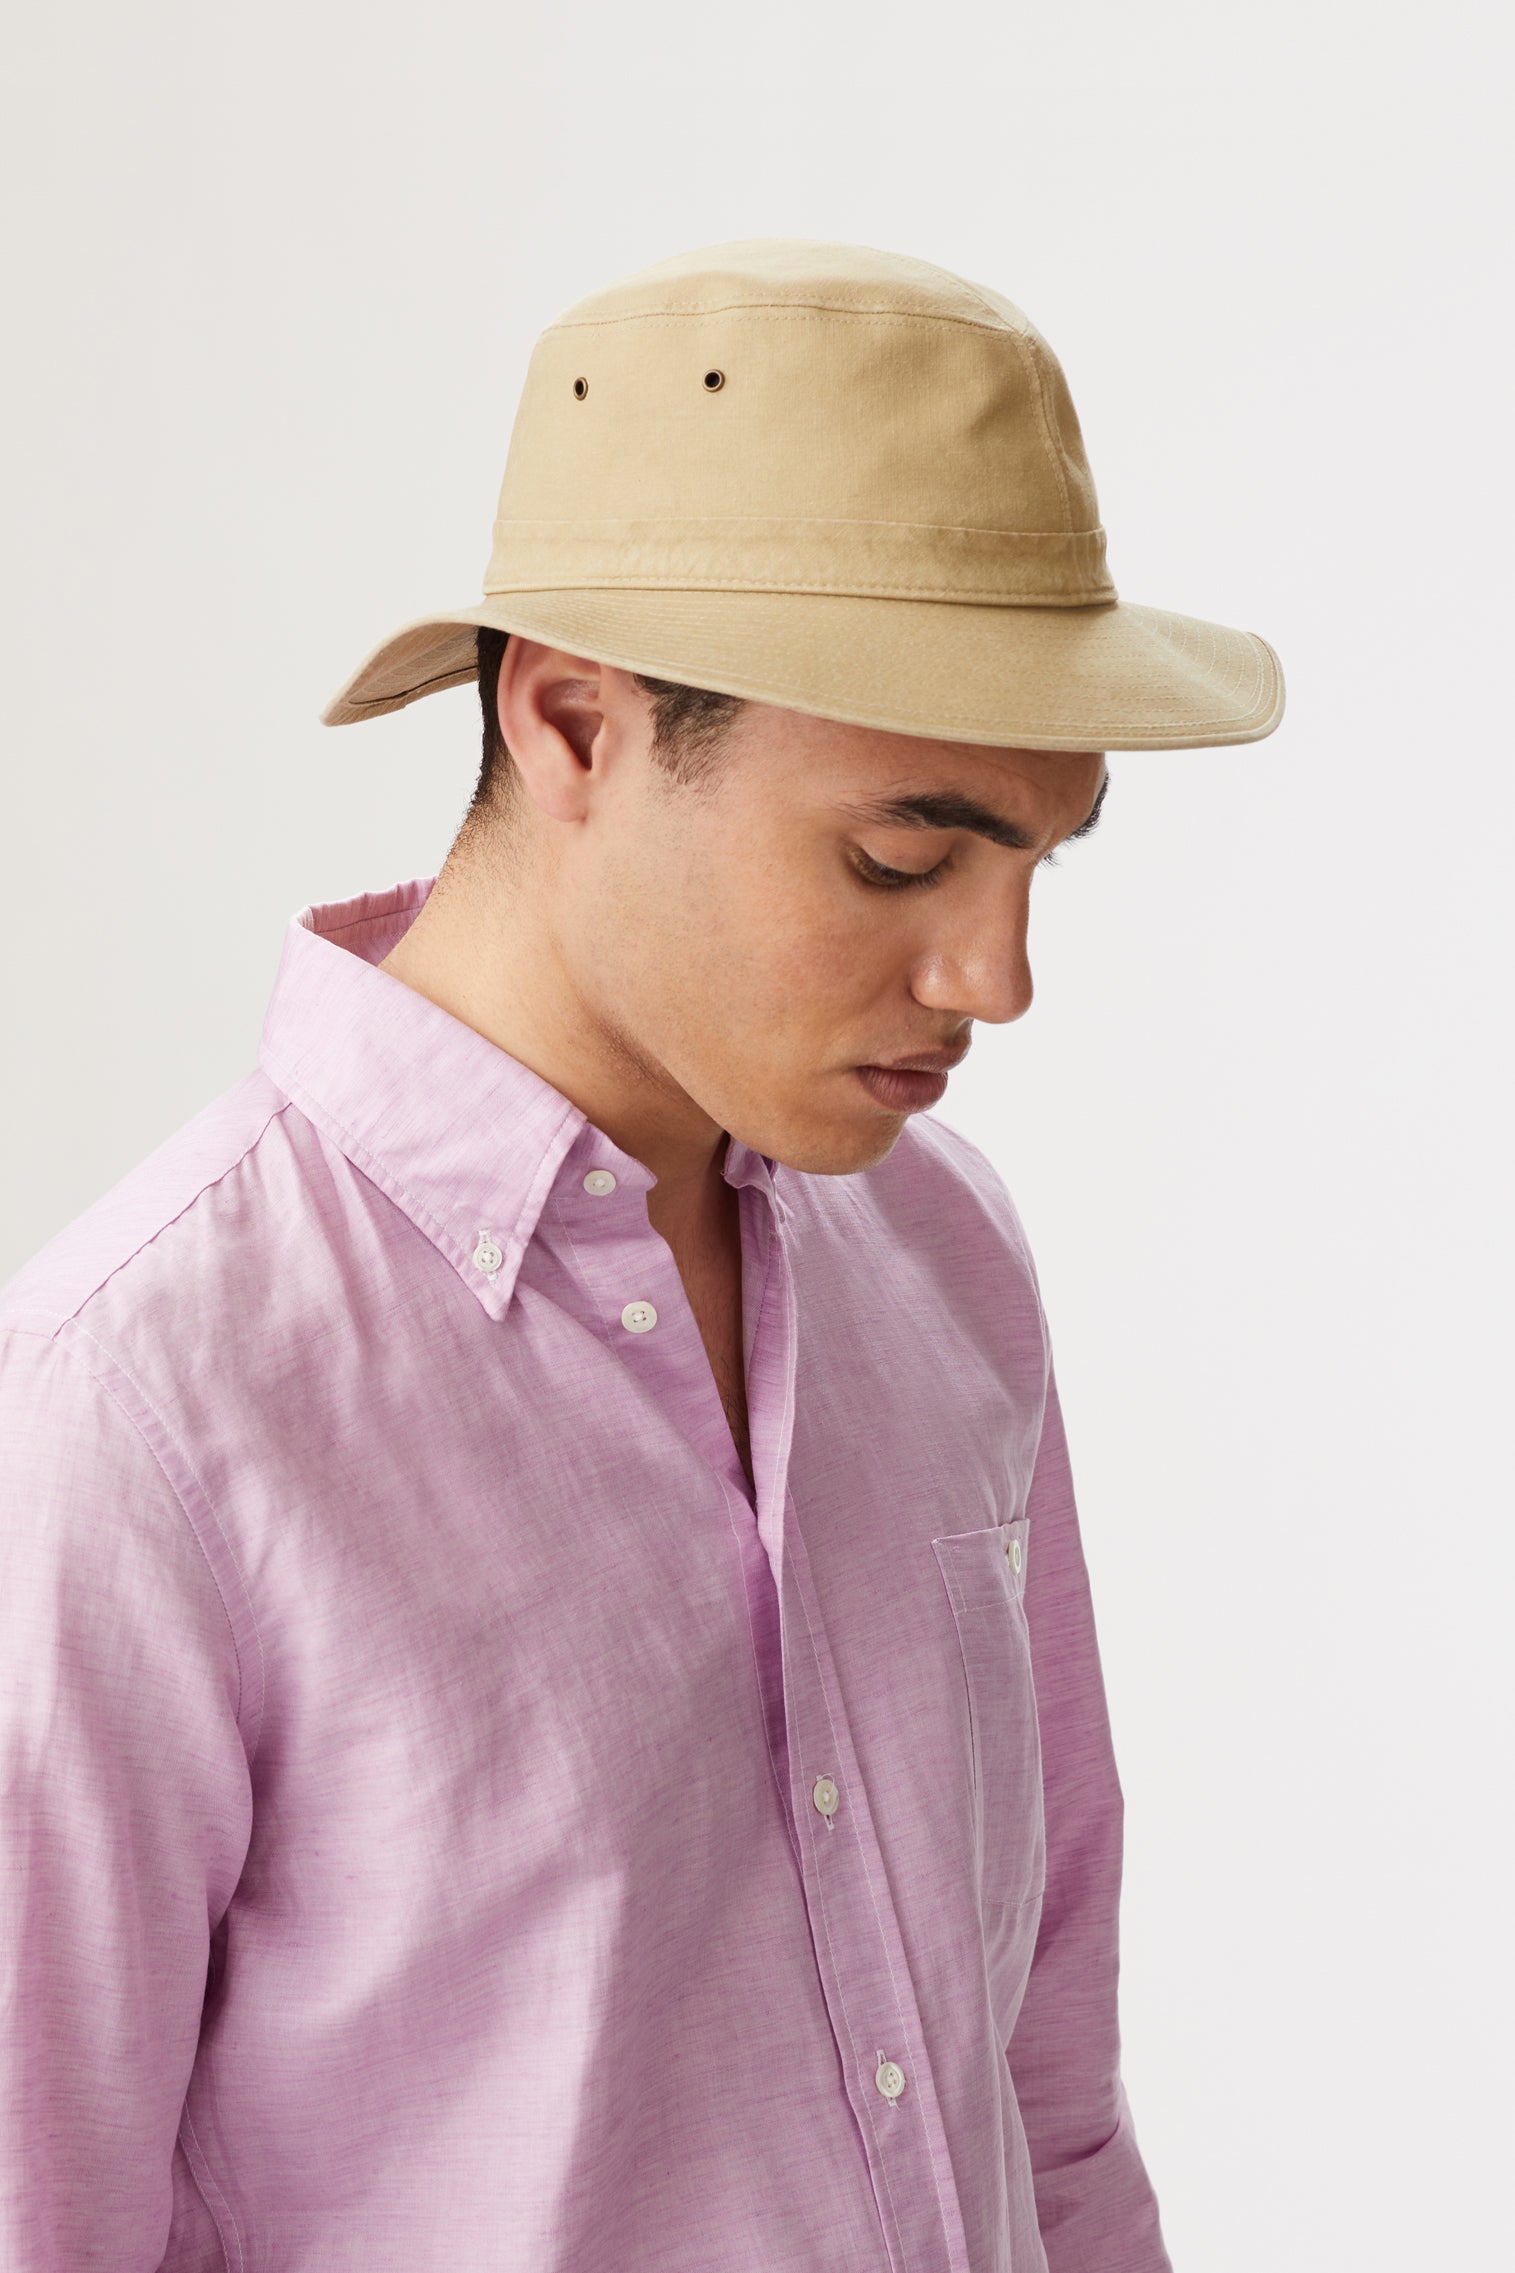 Capri Rollable Hat - Panamas and Sun Hats for Men - Lock & Co. Hatters London UK